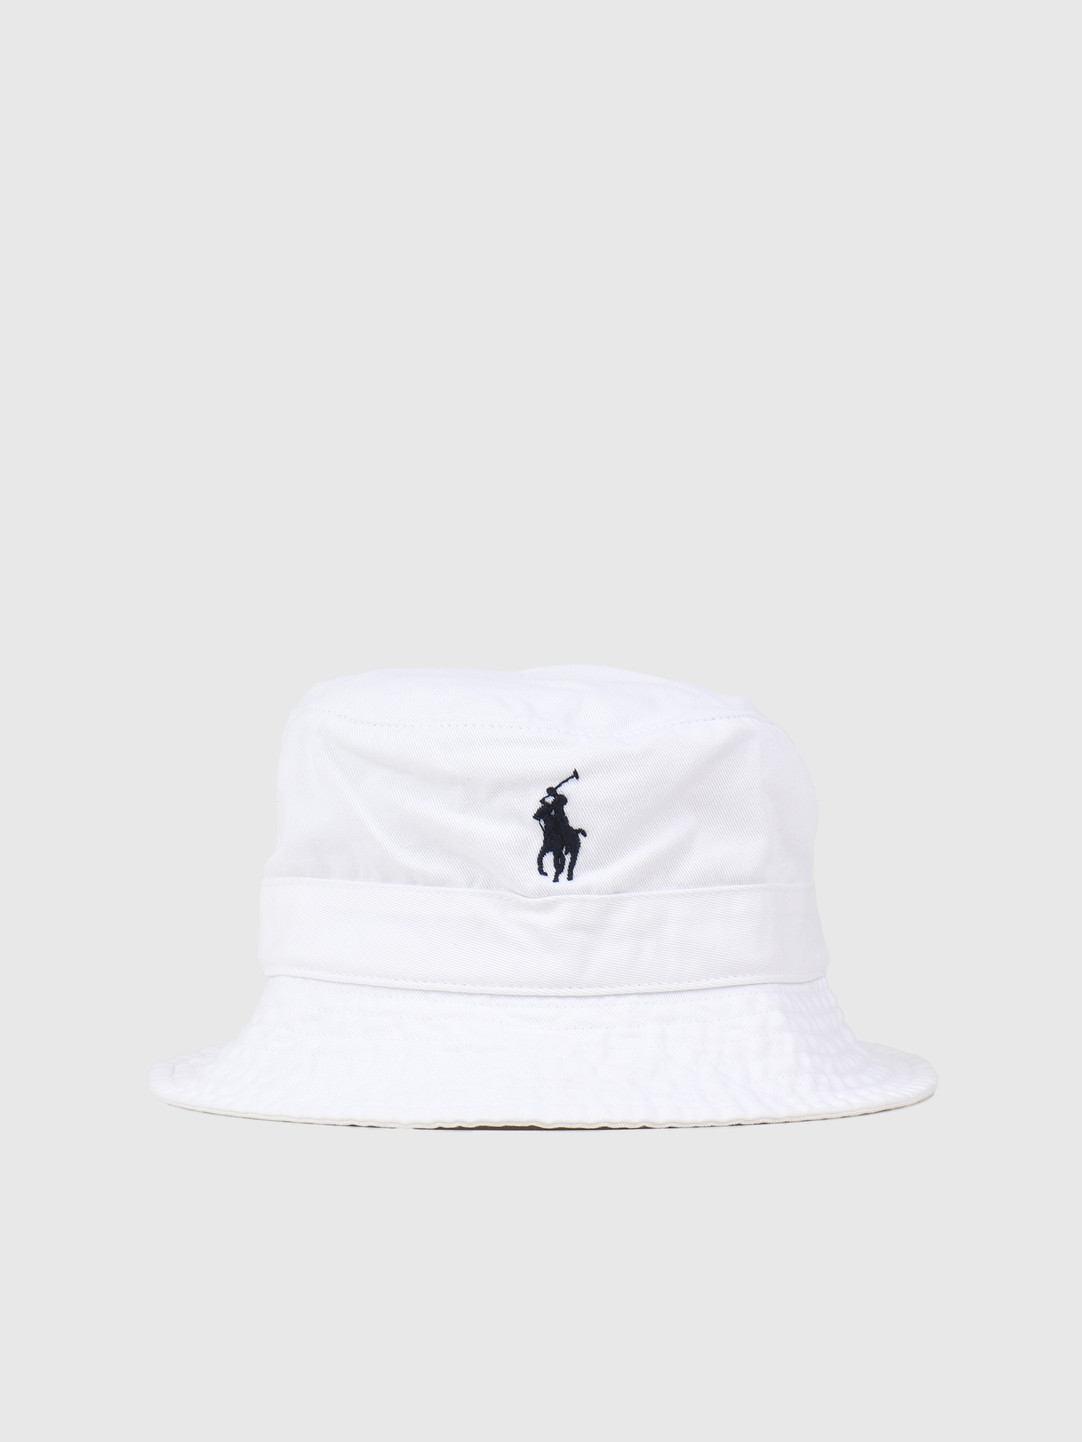 white polo ralph lauren hat